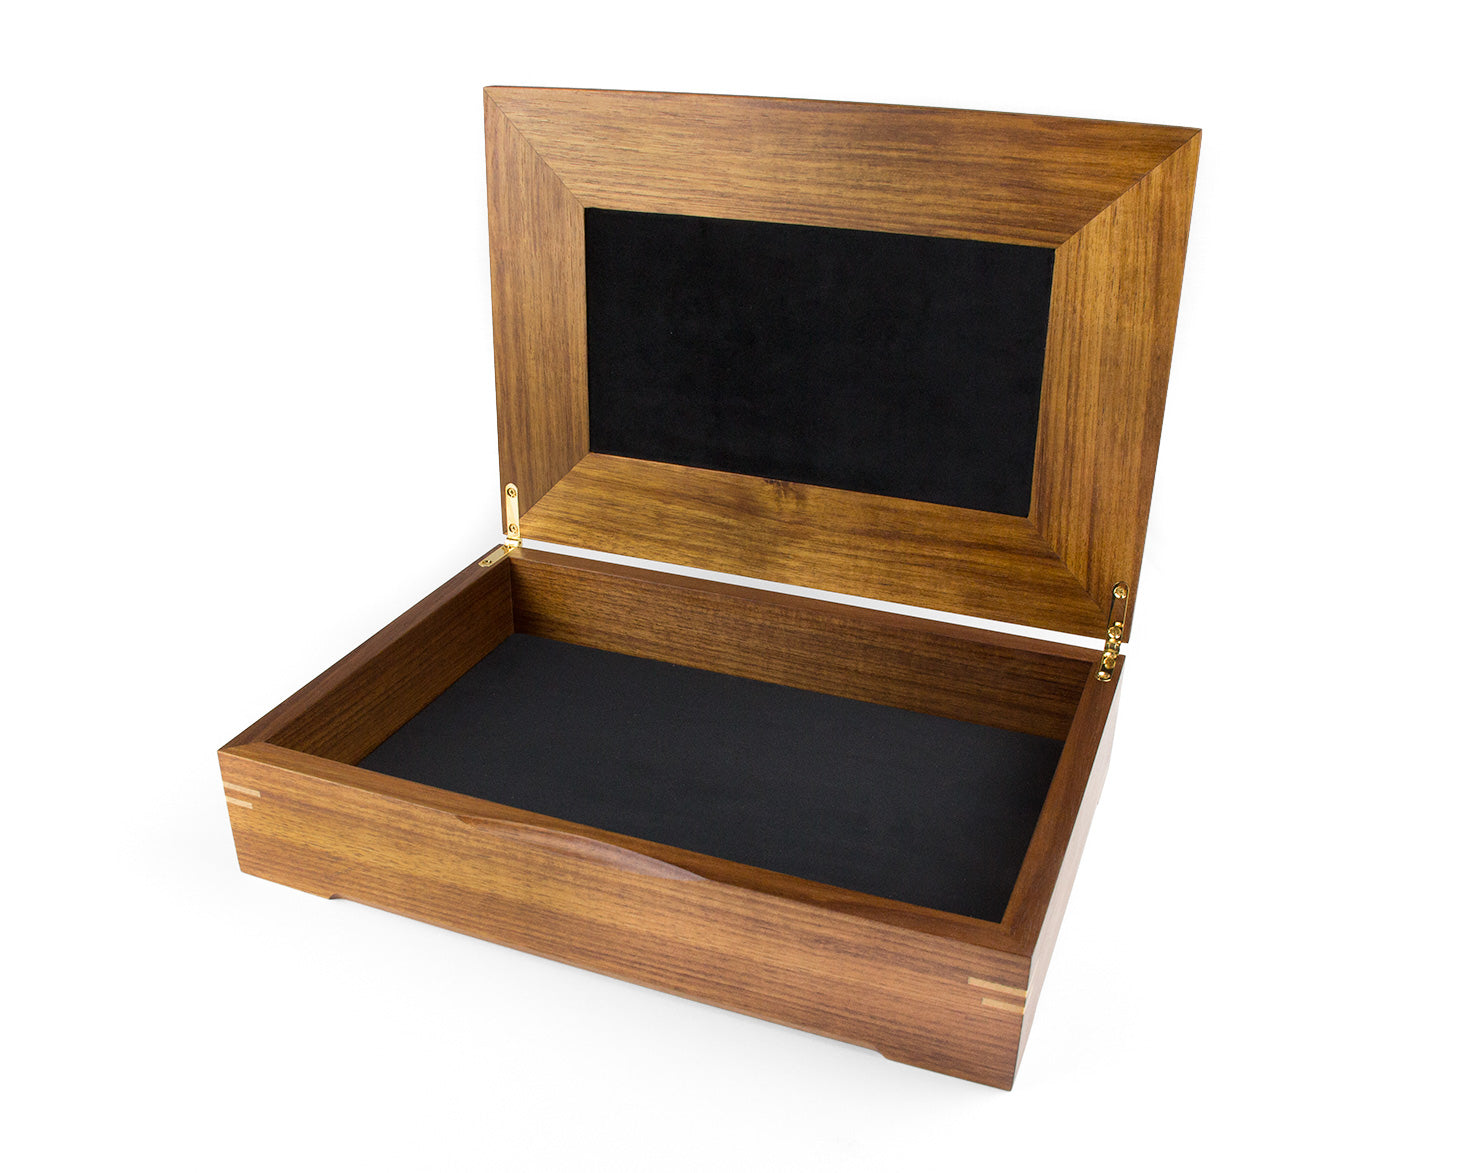 Wooden Document Box handcrafted from Tasmanian Blackwood & Silky Oak veneer